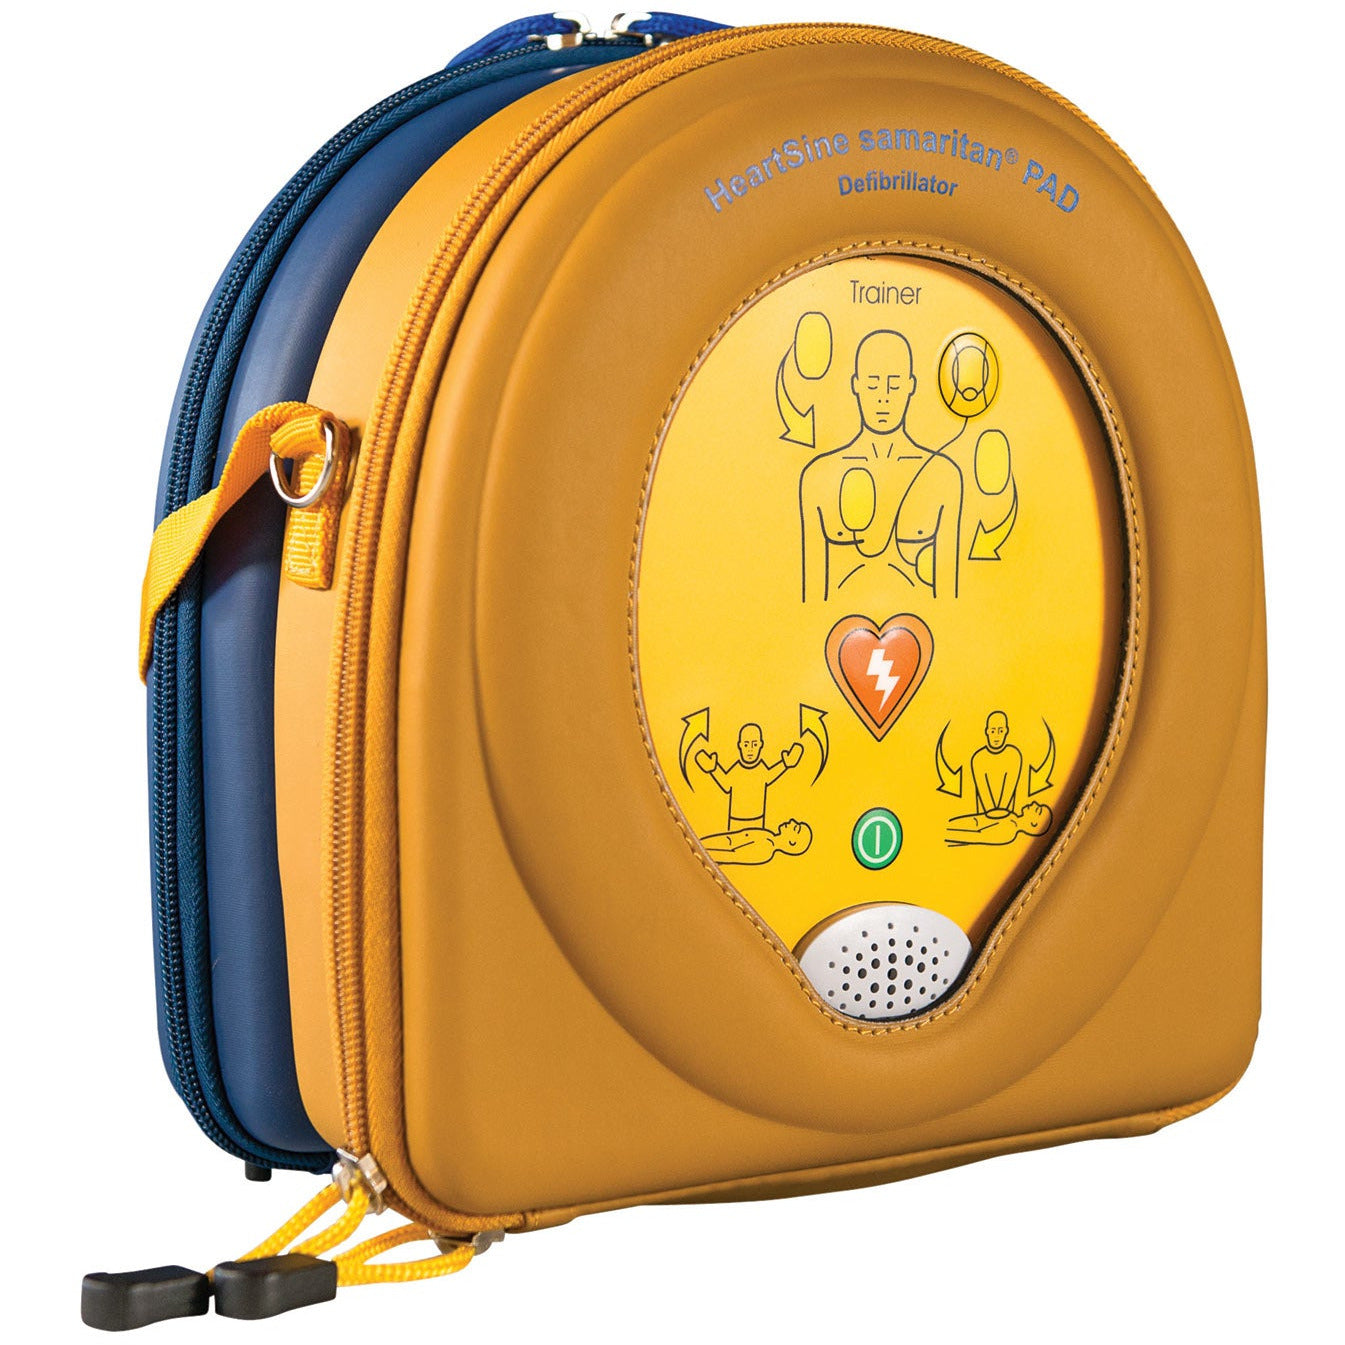 HeartSine Samaritan 350P Semi Automatic AED Defibrillator TRAINER